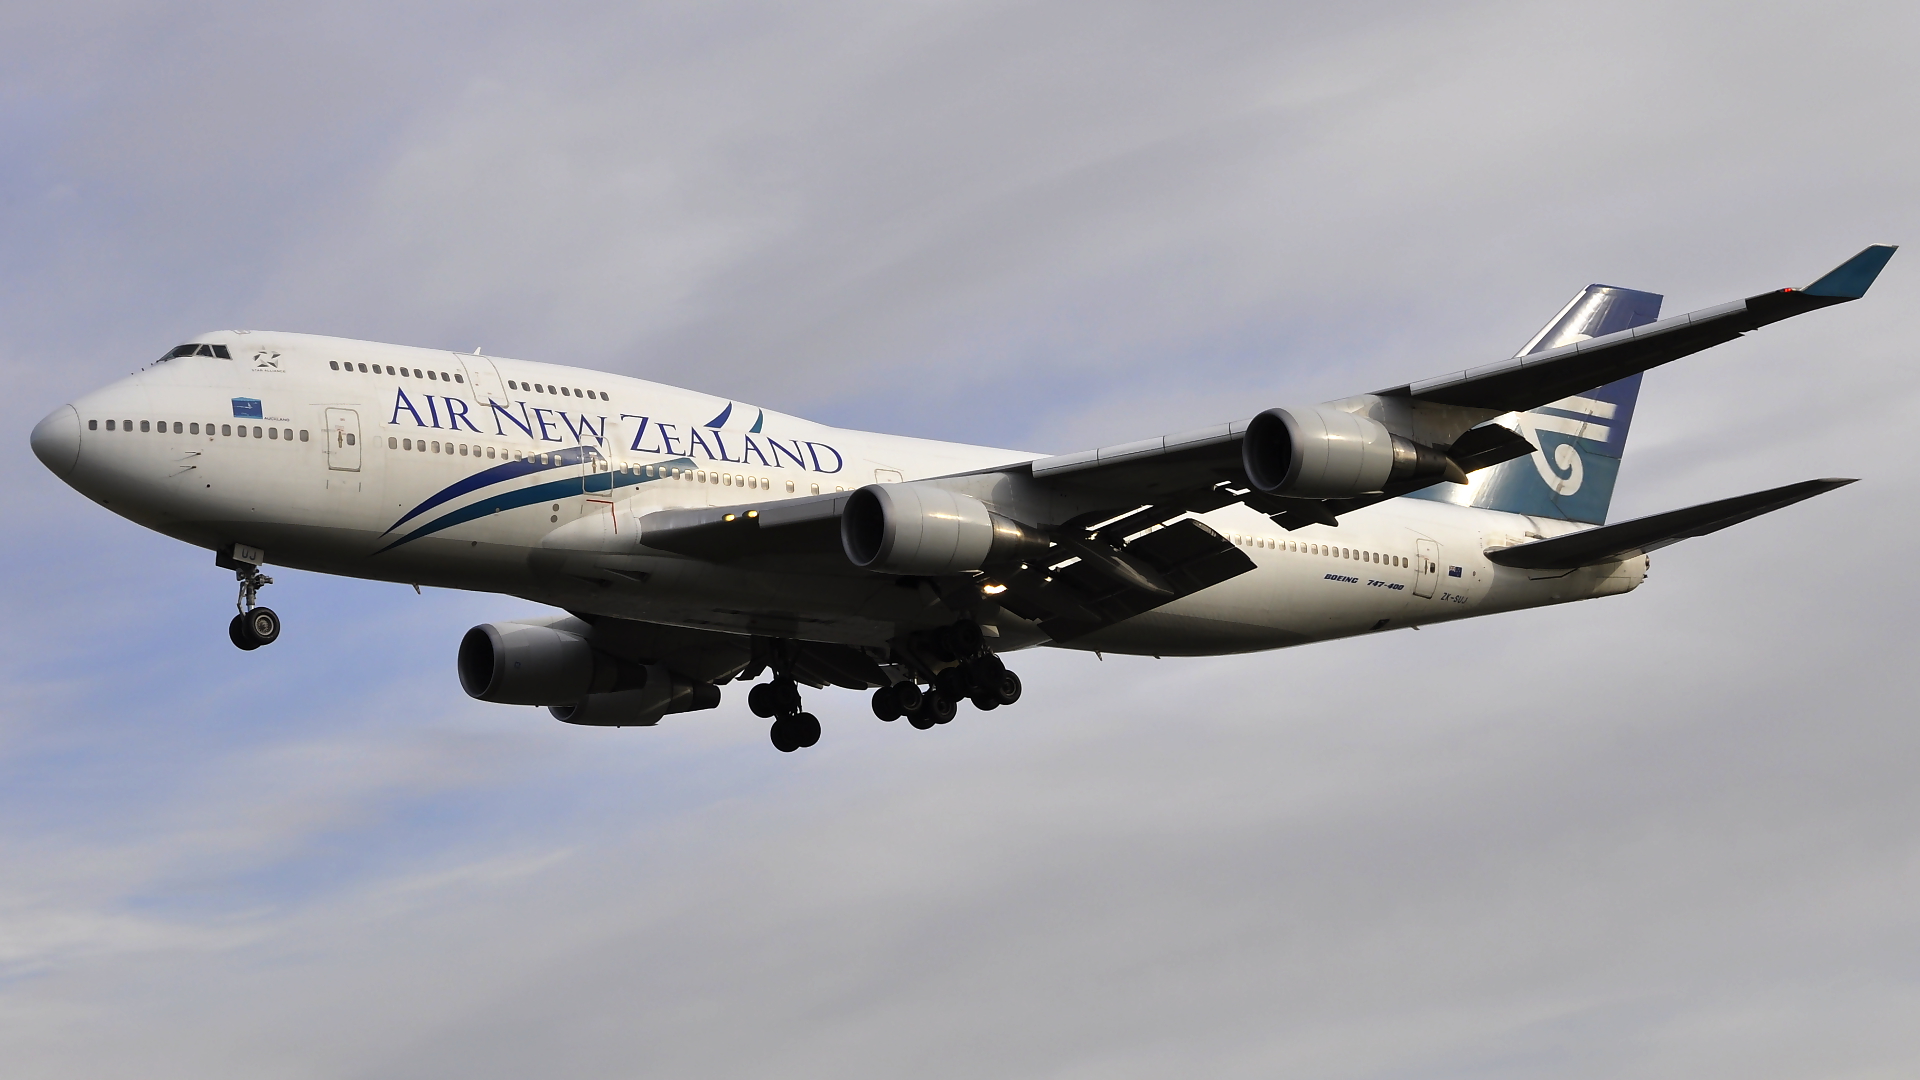 ZK-SUJ ✈ Air New Zealand Boeing 747-4F6 @ London-Heathrow